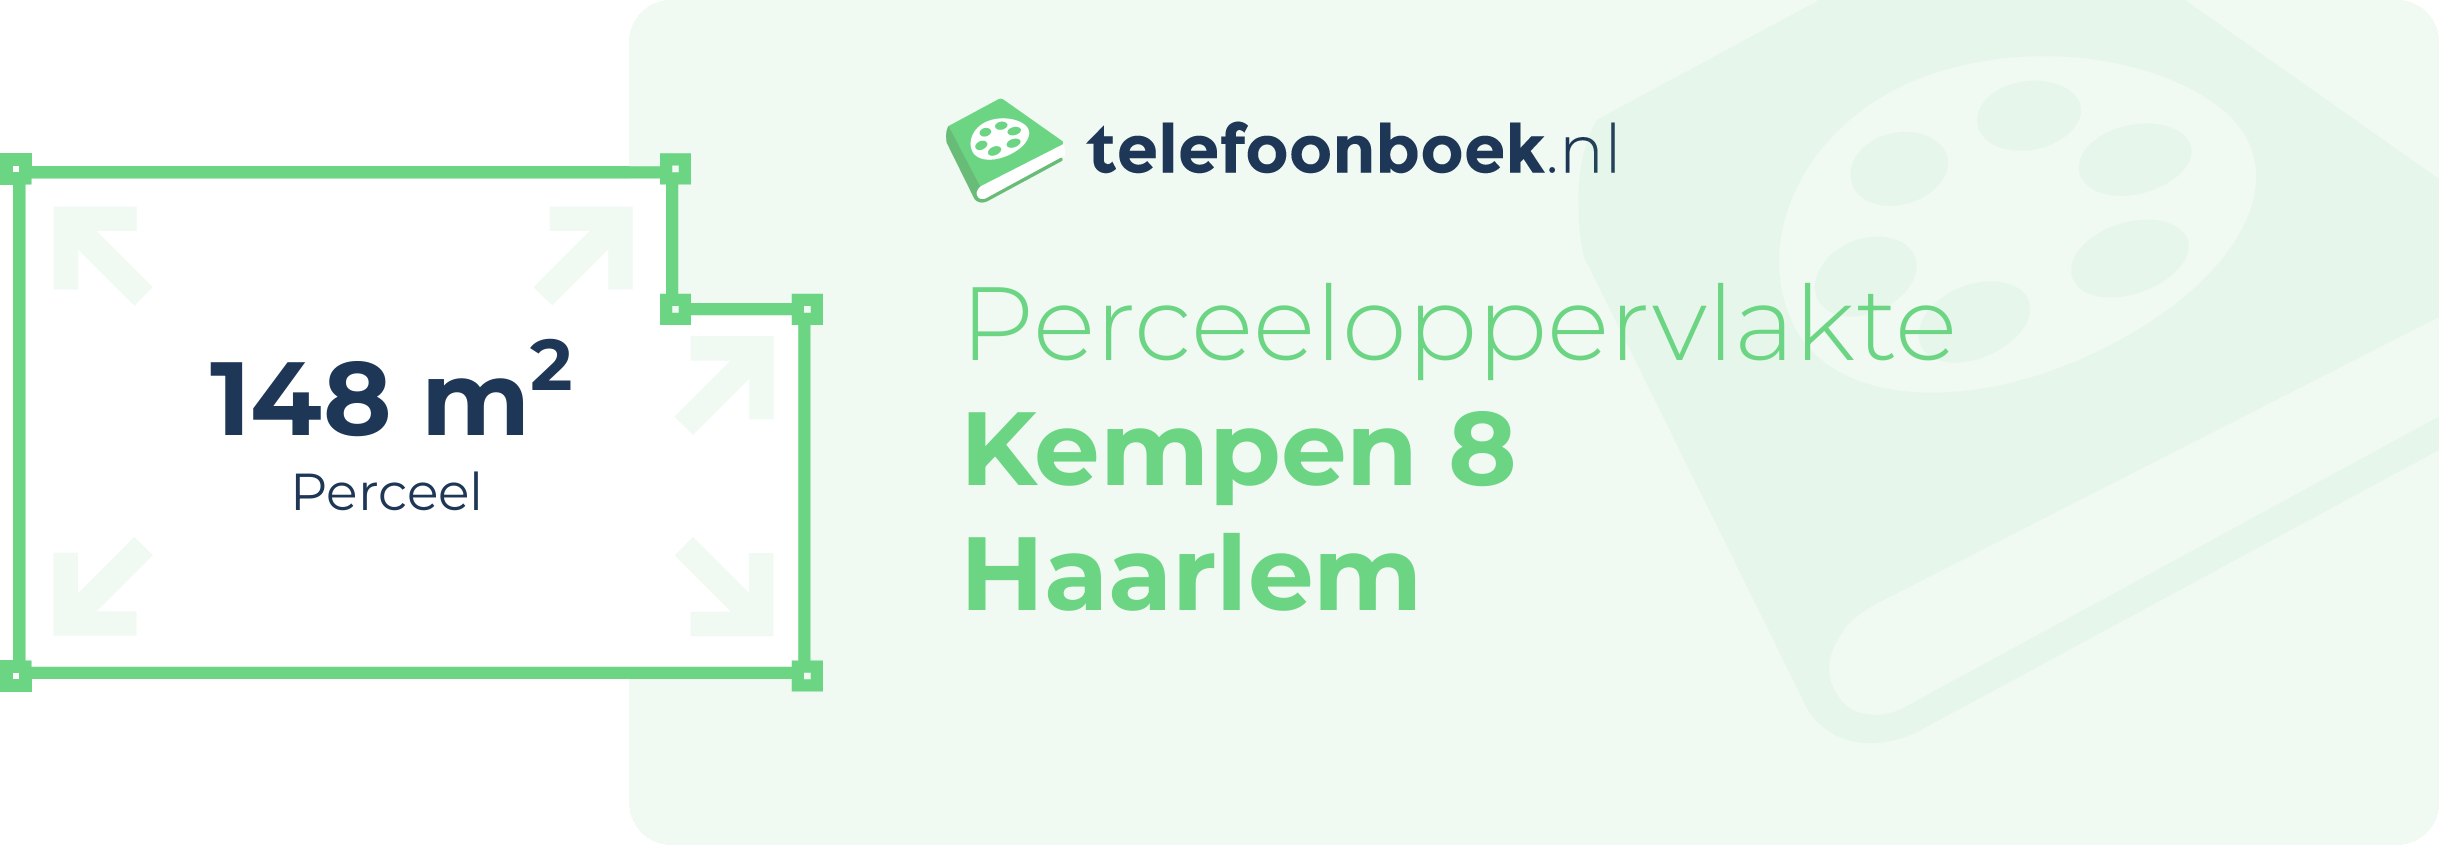 Perceeloppervlakte Kempen 8 Haarlem